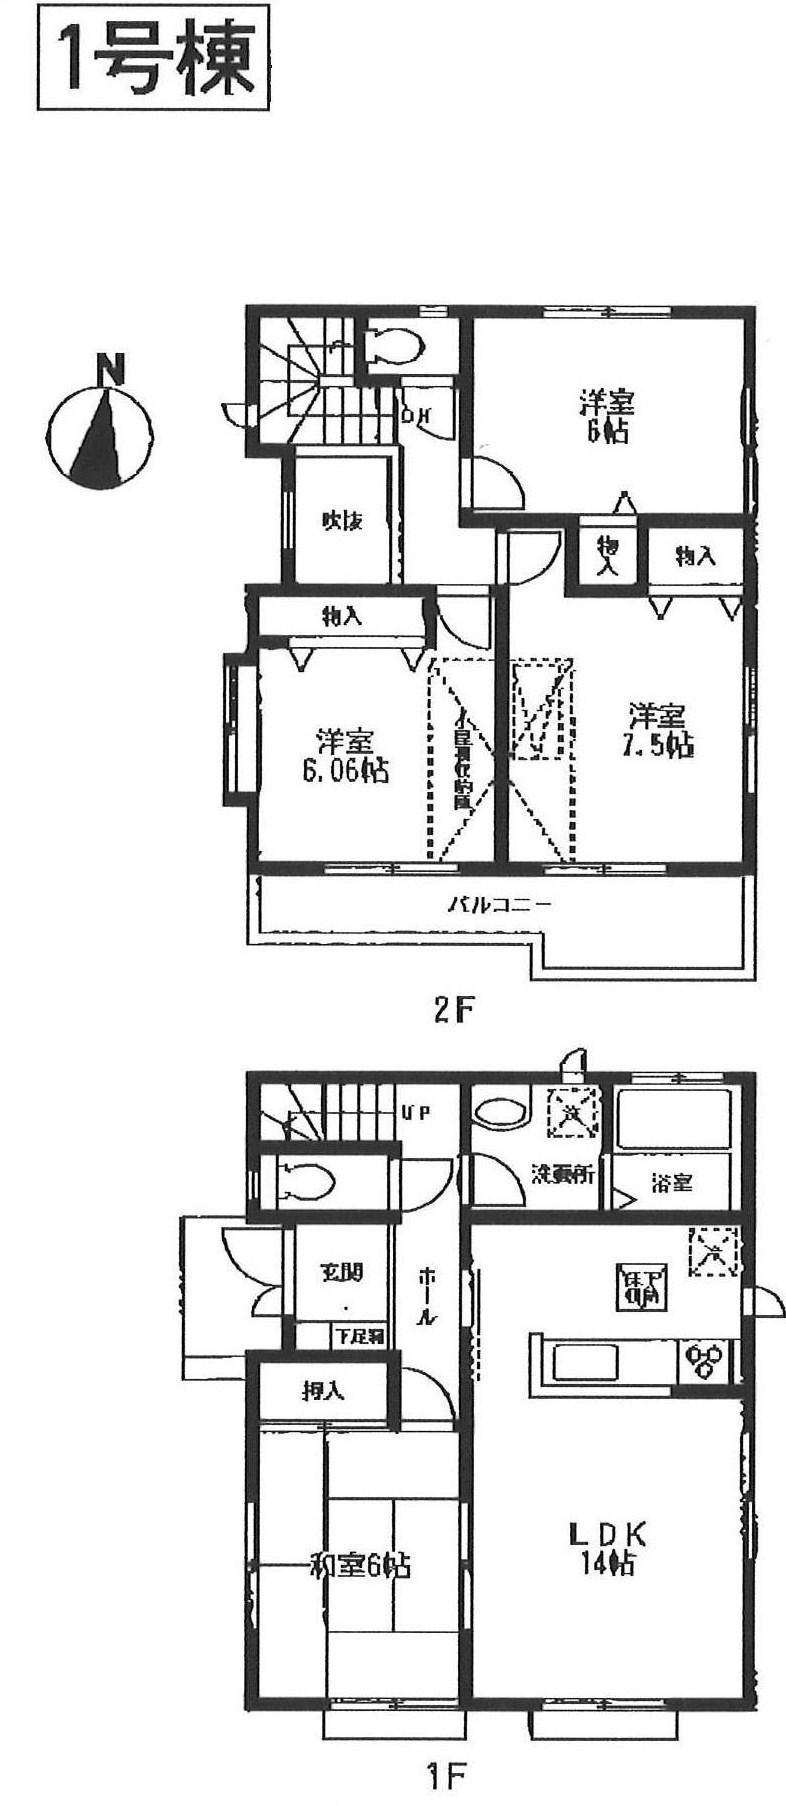 Floor plan. (1 Building), Price 38,800,000 yen, 4LDK, Land area 141.24 sq m , Building area 94.4 sq m